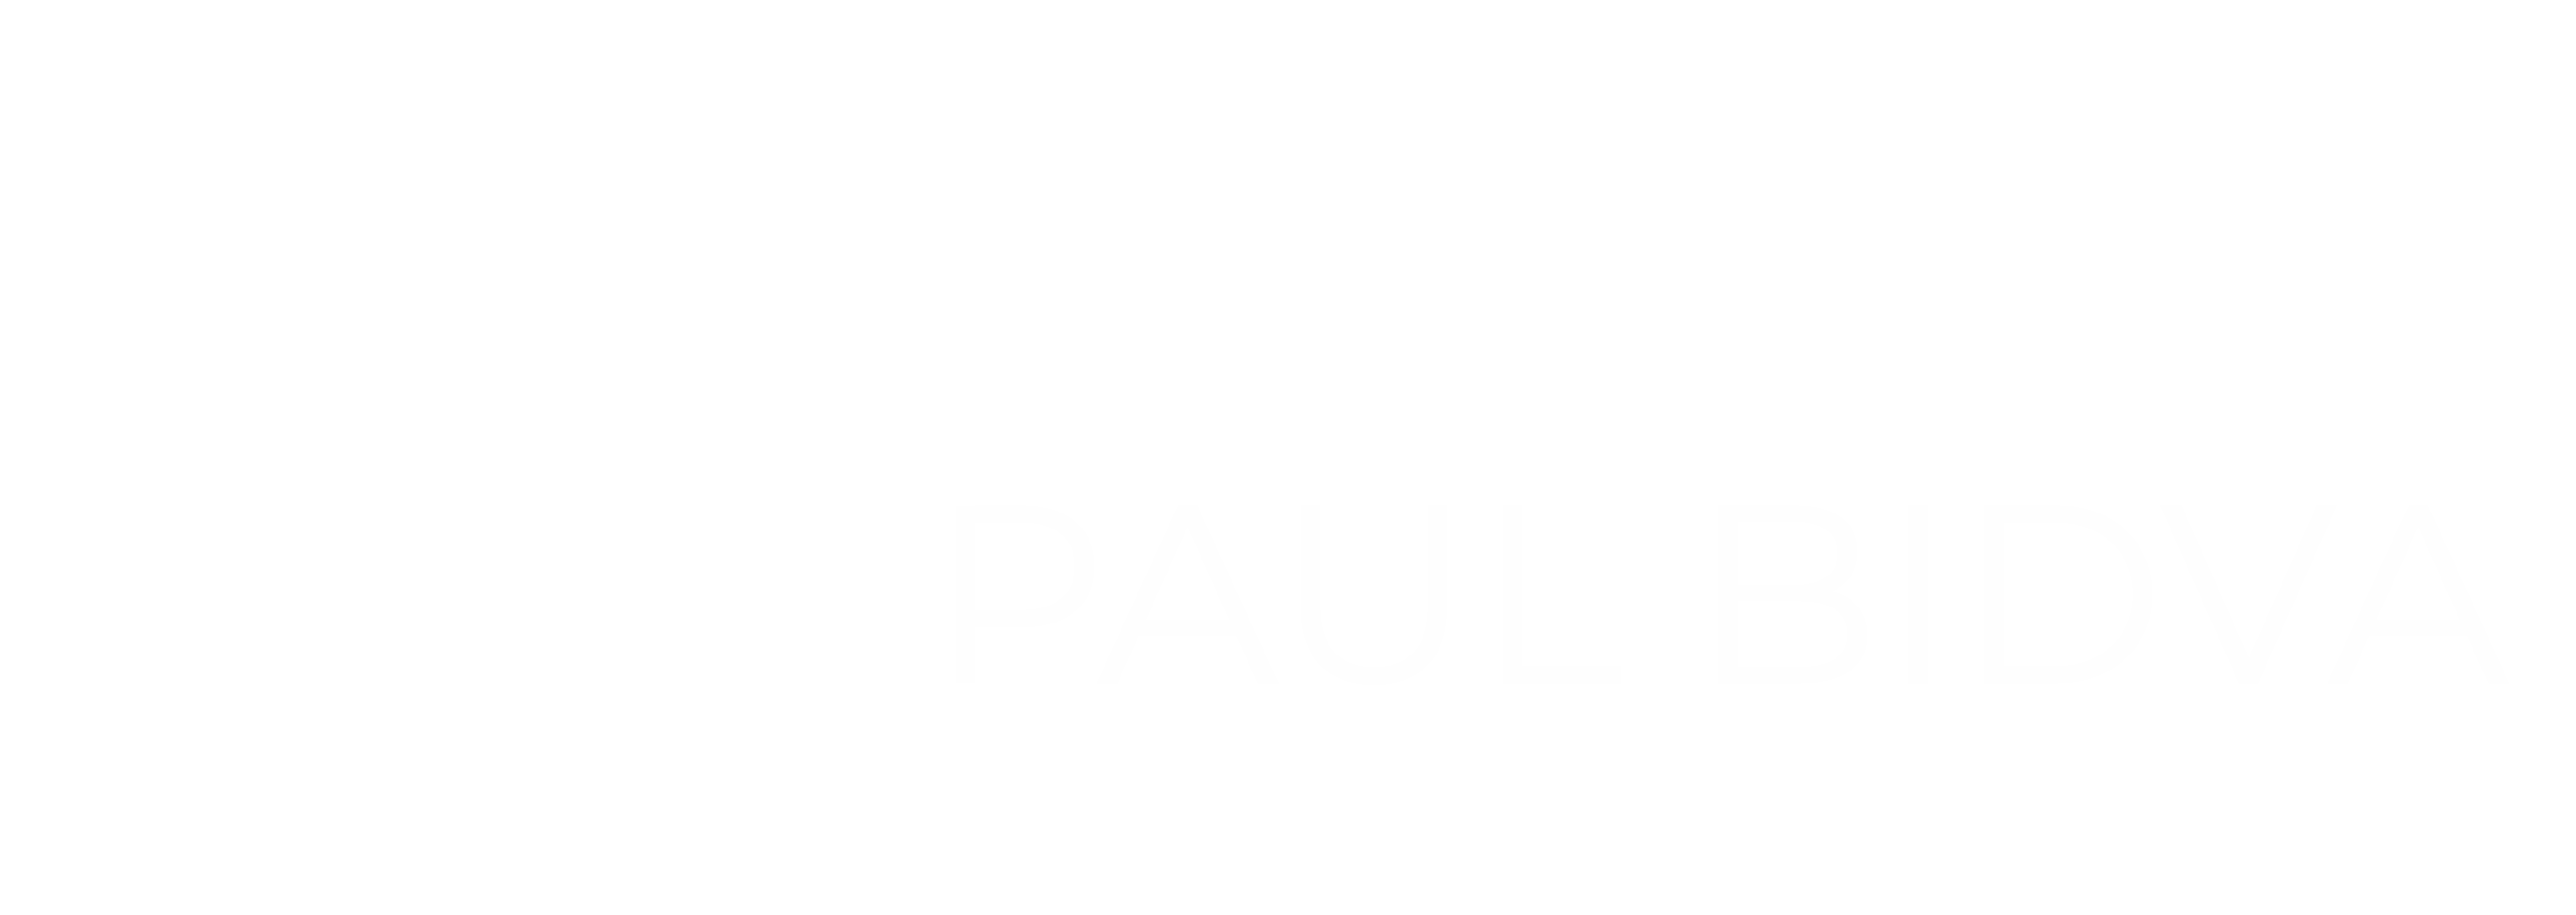 Jim Pappas and Paul Bidva Luxury Real Estate